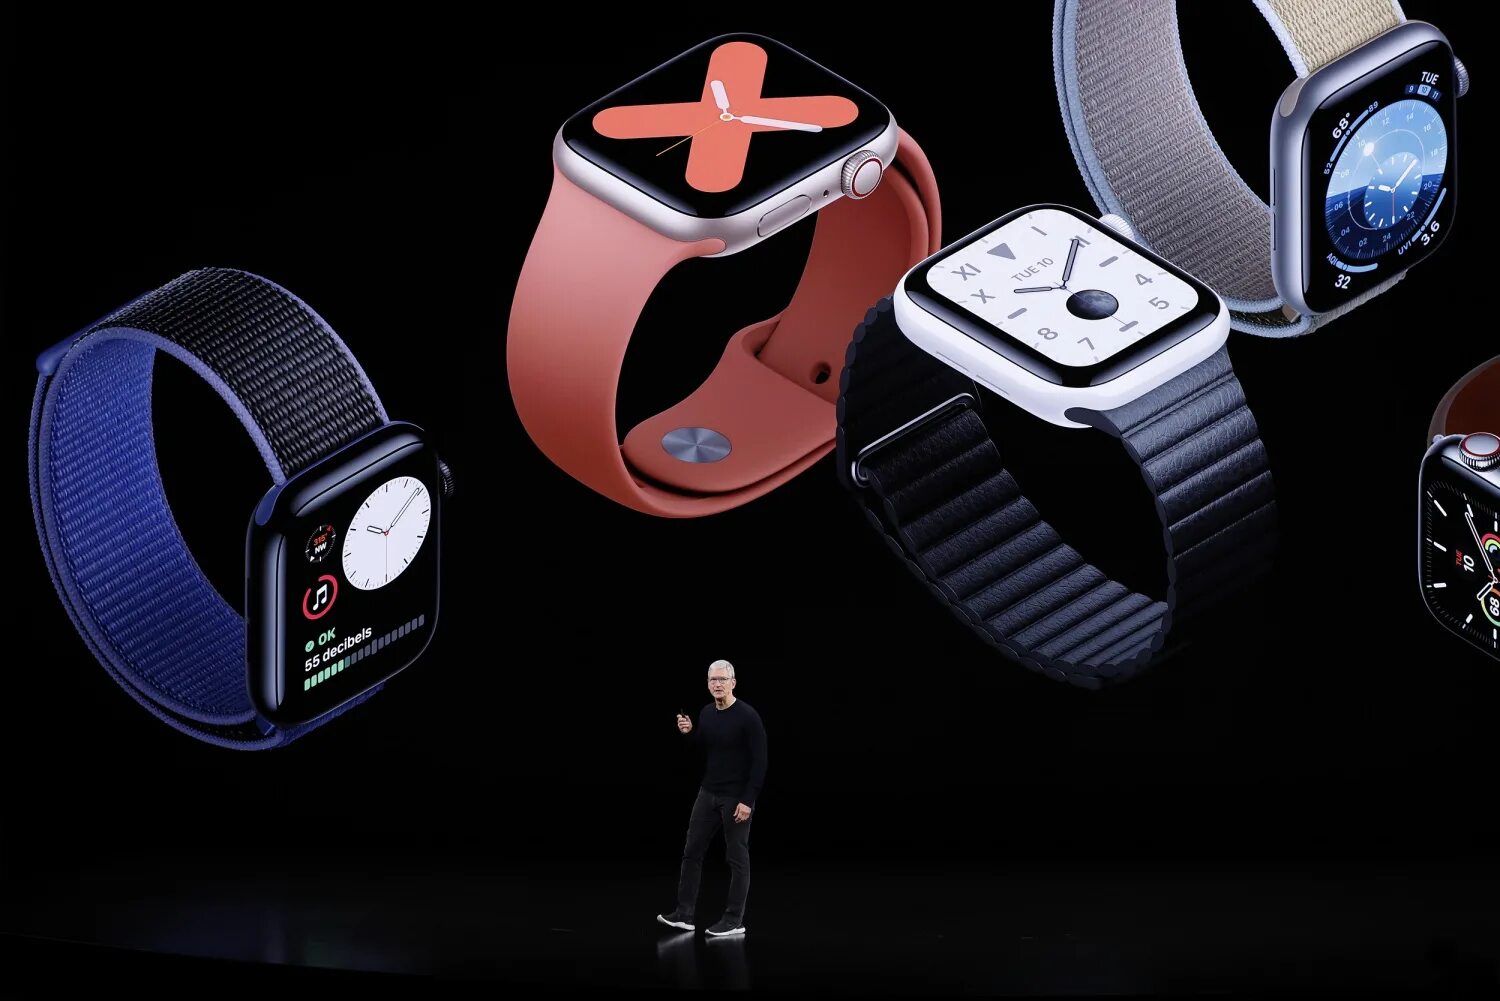 New watch 7. Часы эпл вотч 5. Смарт часы вотч 6. Часы Эппл вотч 9. Смарт-часы Apple IWATCH последняя модель.